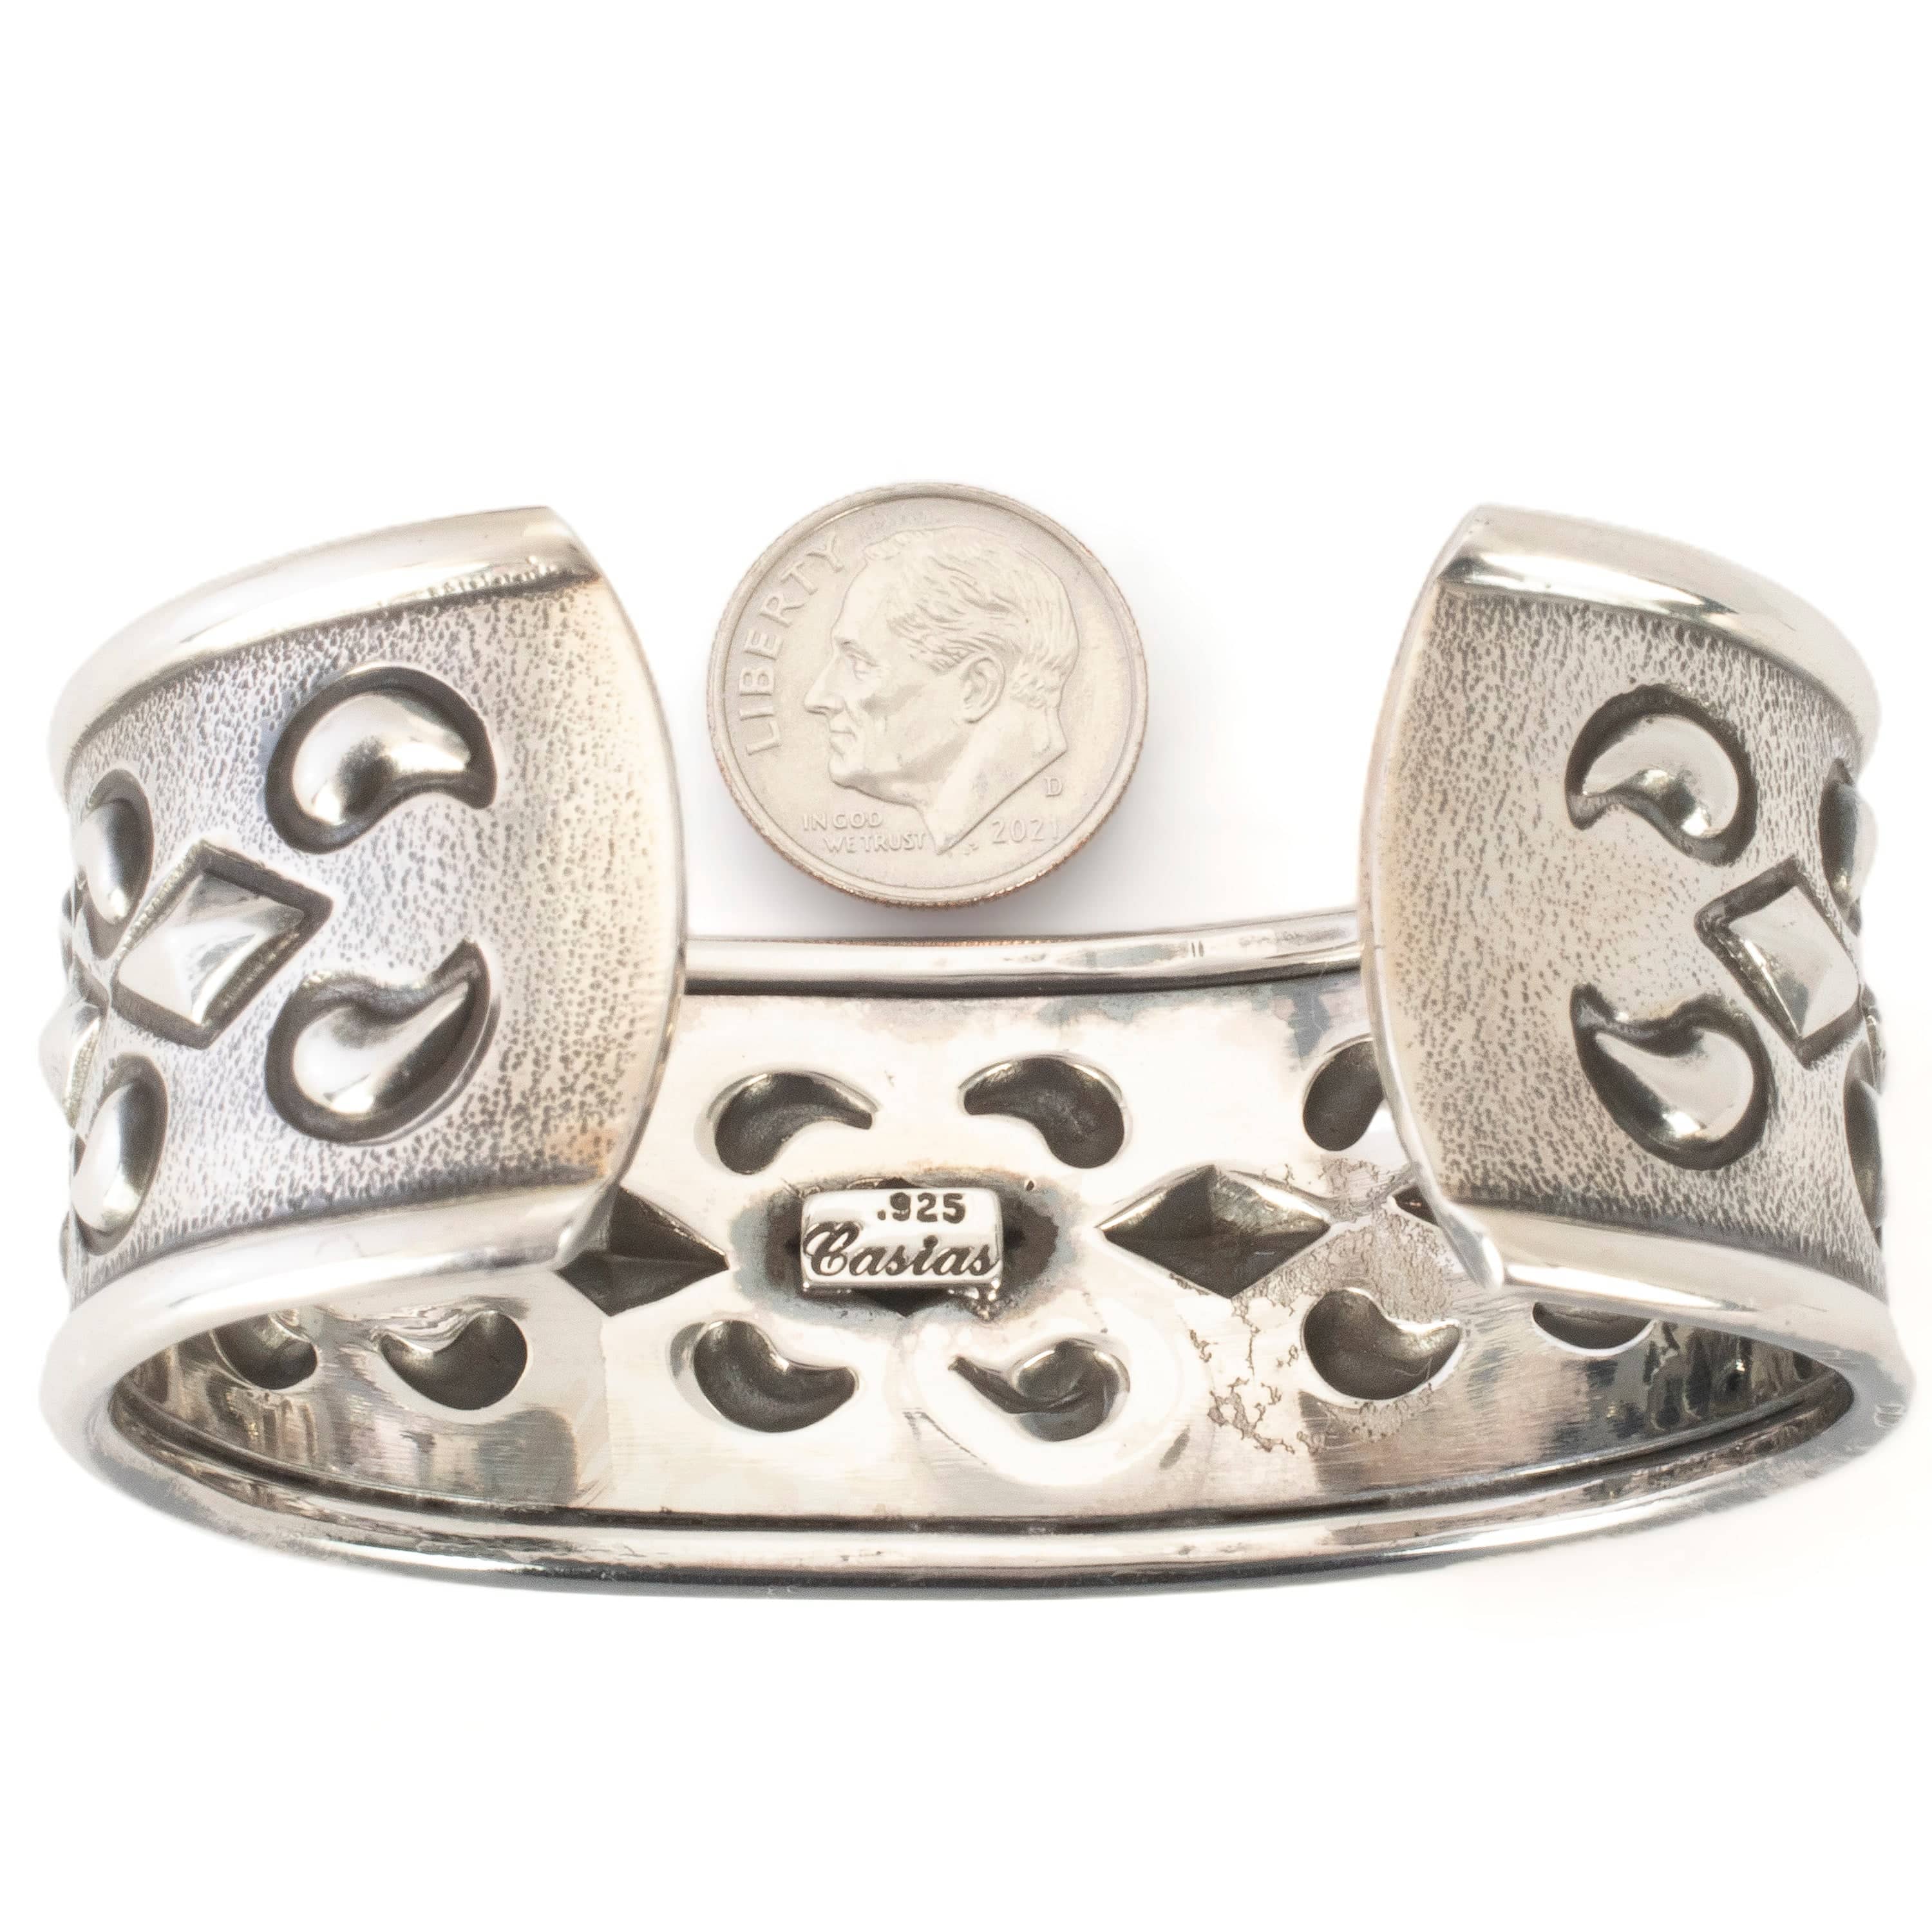 Kalifano Native American Jewelry Shane Casias USA Native American Made 925 Sterling Silver Cuff NAB3000.007